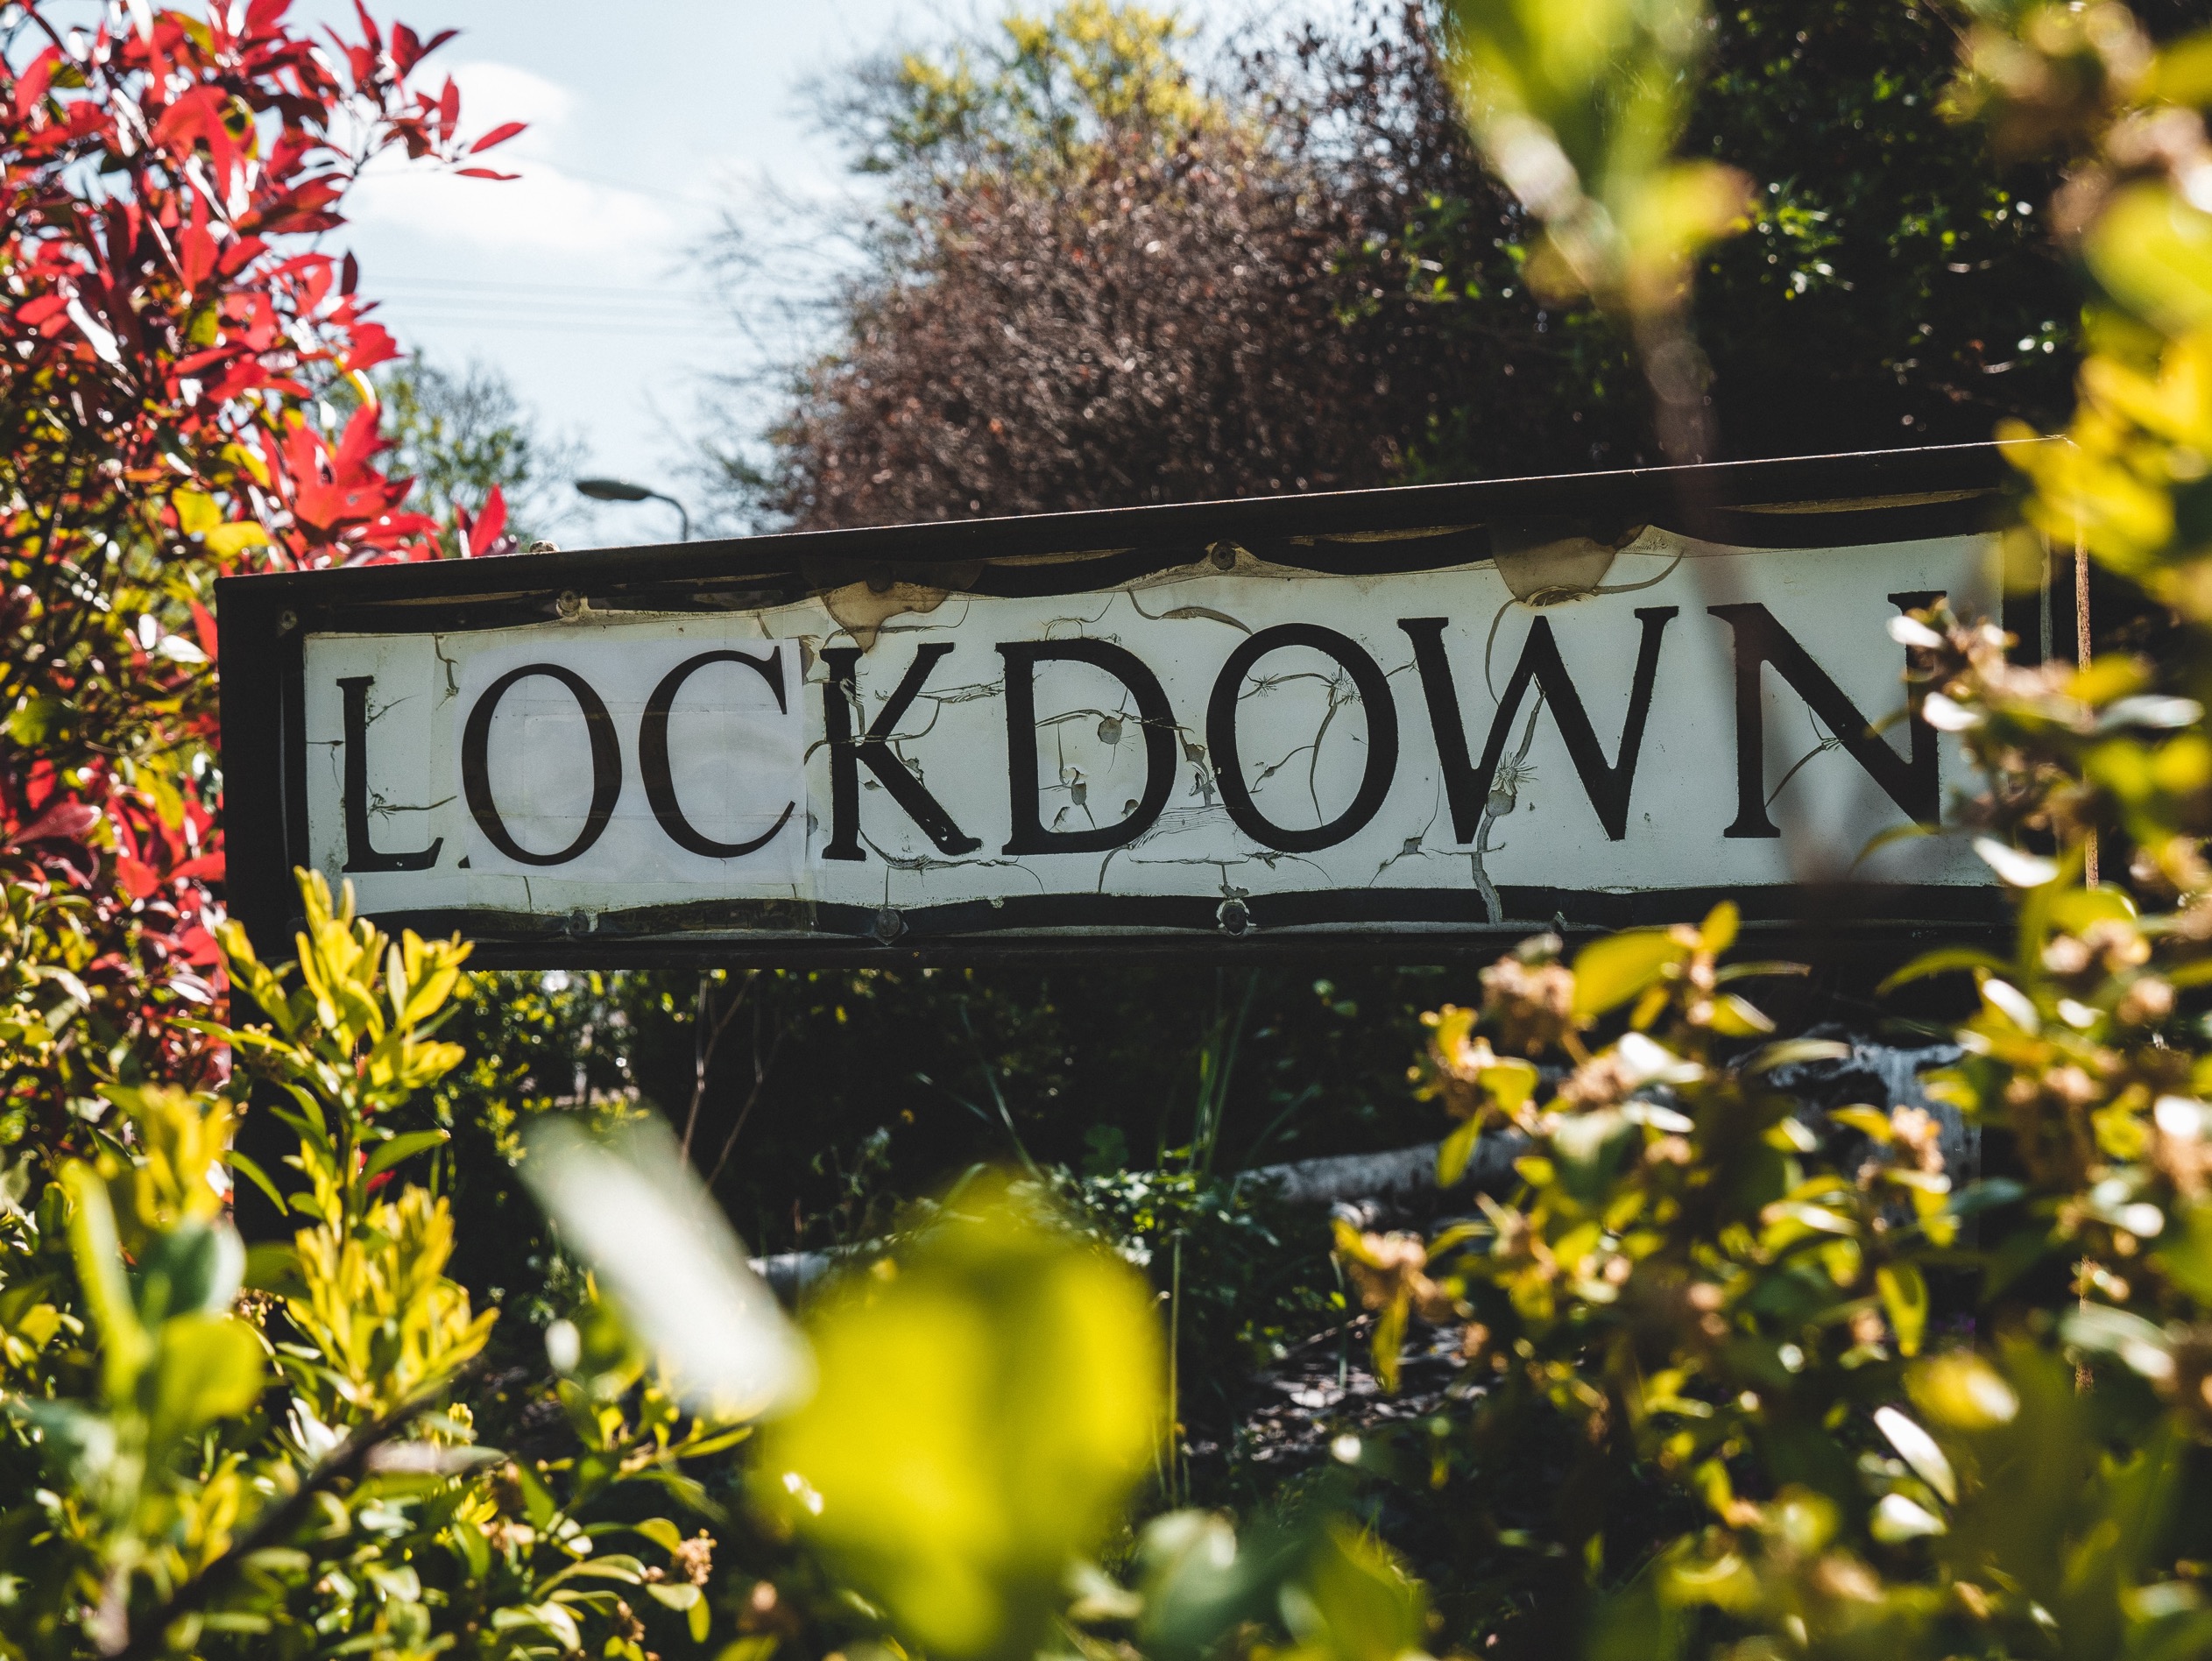 A street sign saying Lockdown. Photo by Matt Seymour on Unsplash